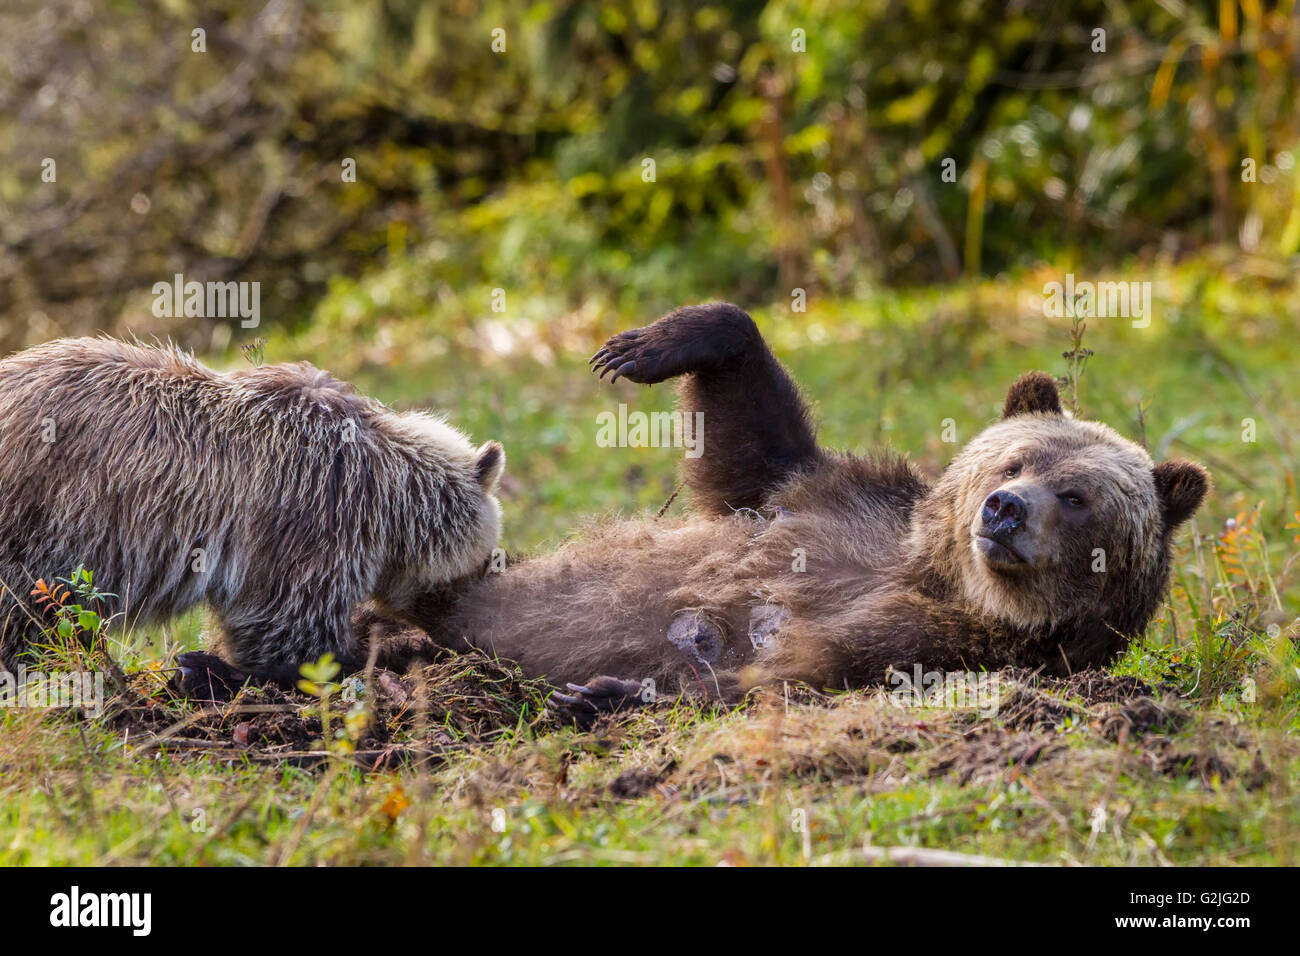 Coastal grizzly bear (Ursus arctos), mom and cub, nursing along shoreline in beautiful Knight Inlet, British Columbia, Canada. Stock Photo